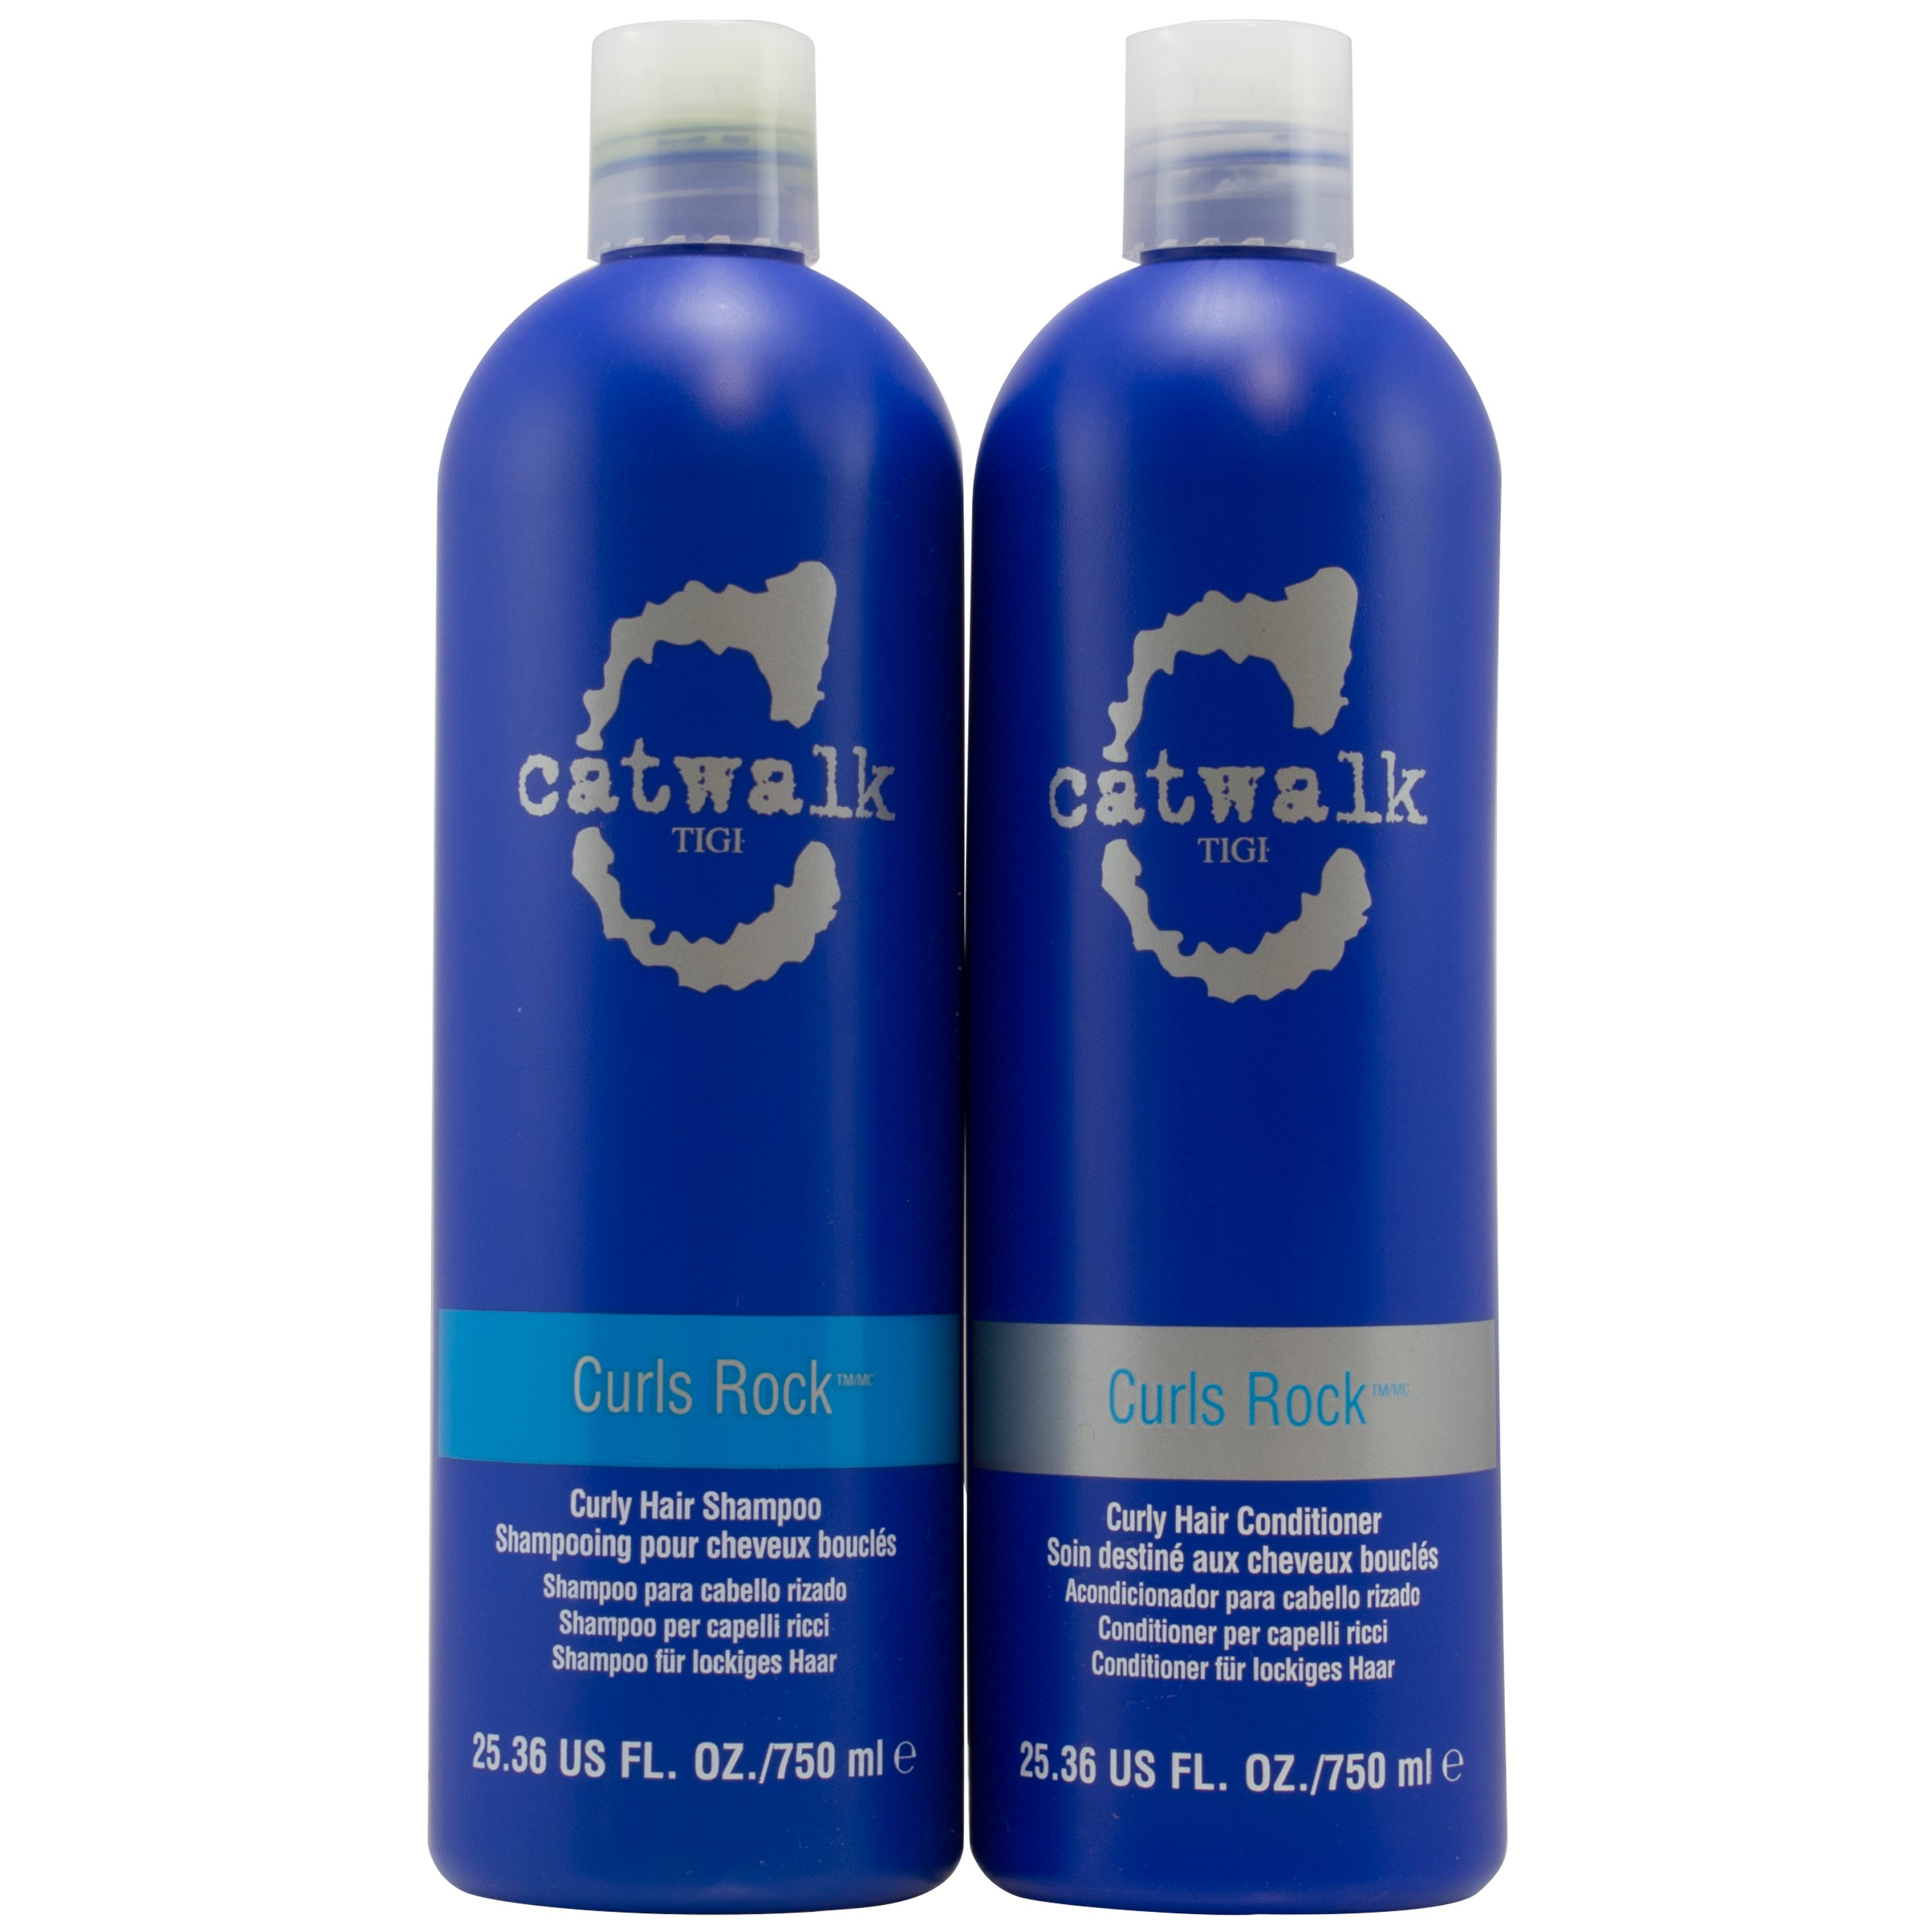 TIGI Catwalk Curls Rock Shampoo Conditioner - Shop Shampoo & Conditioner H-E-B